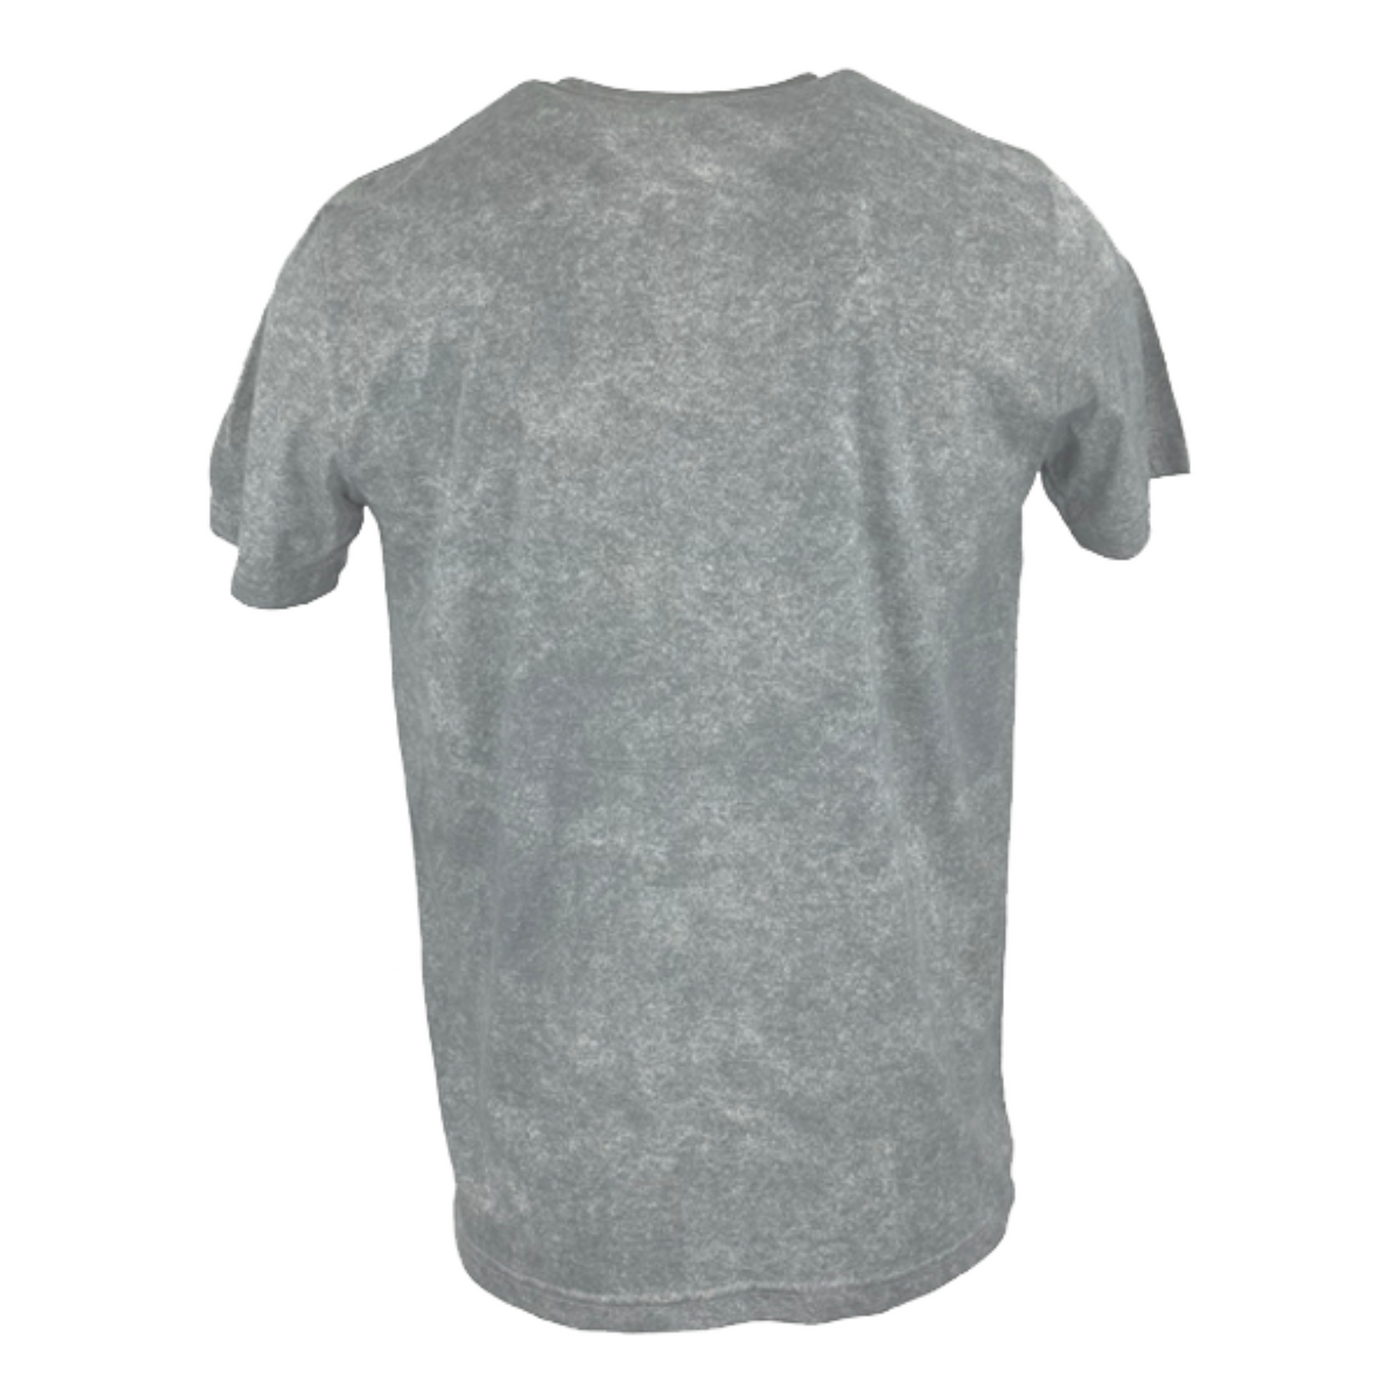 Belles - Logo Shirt - Vintage Gray